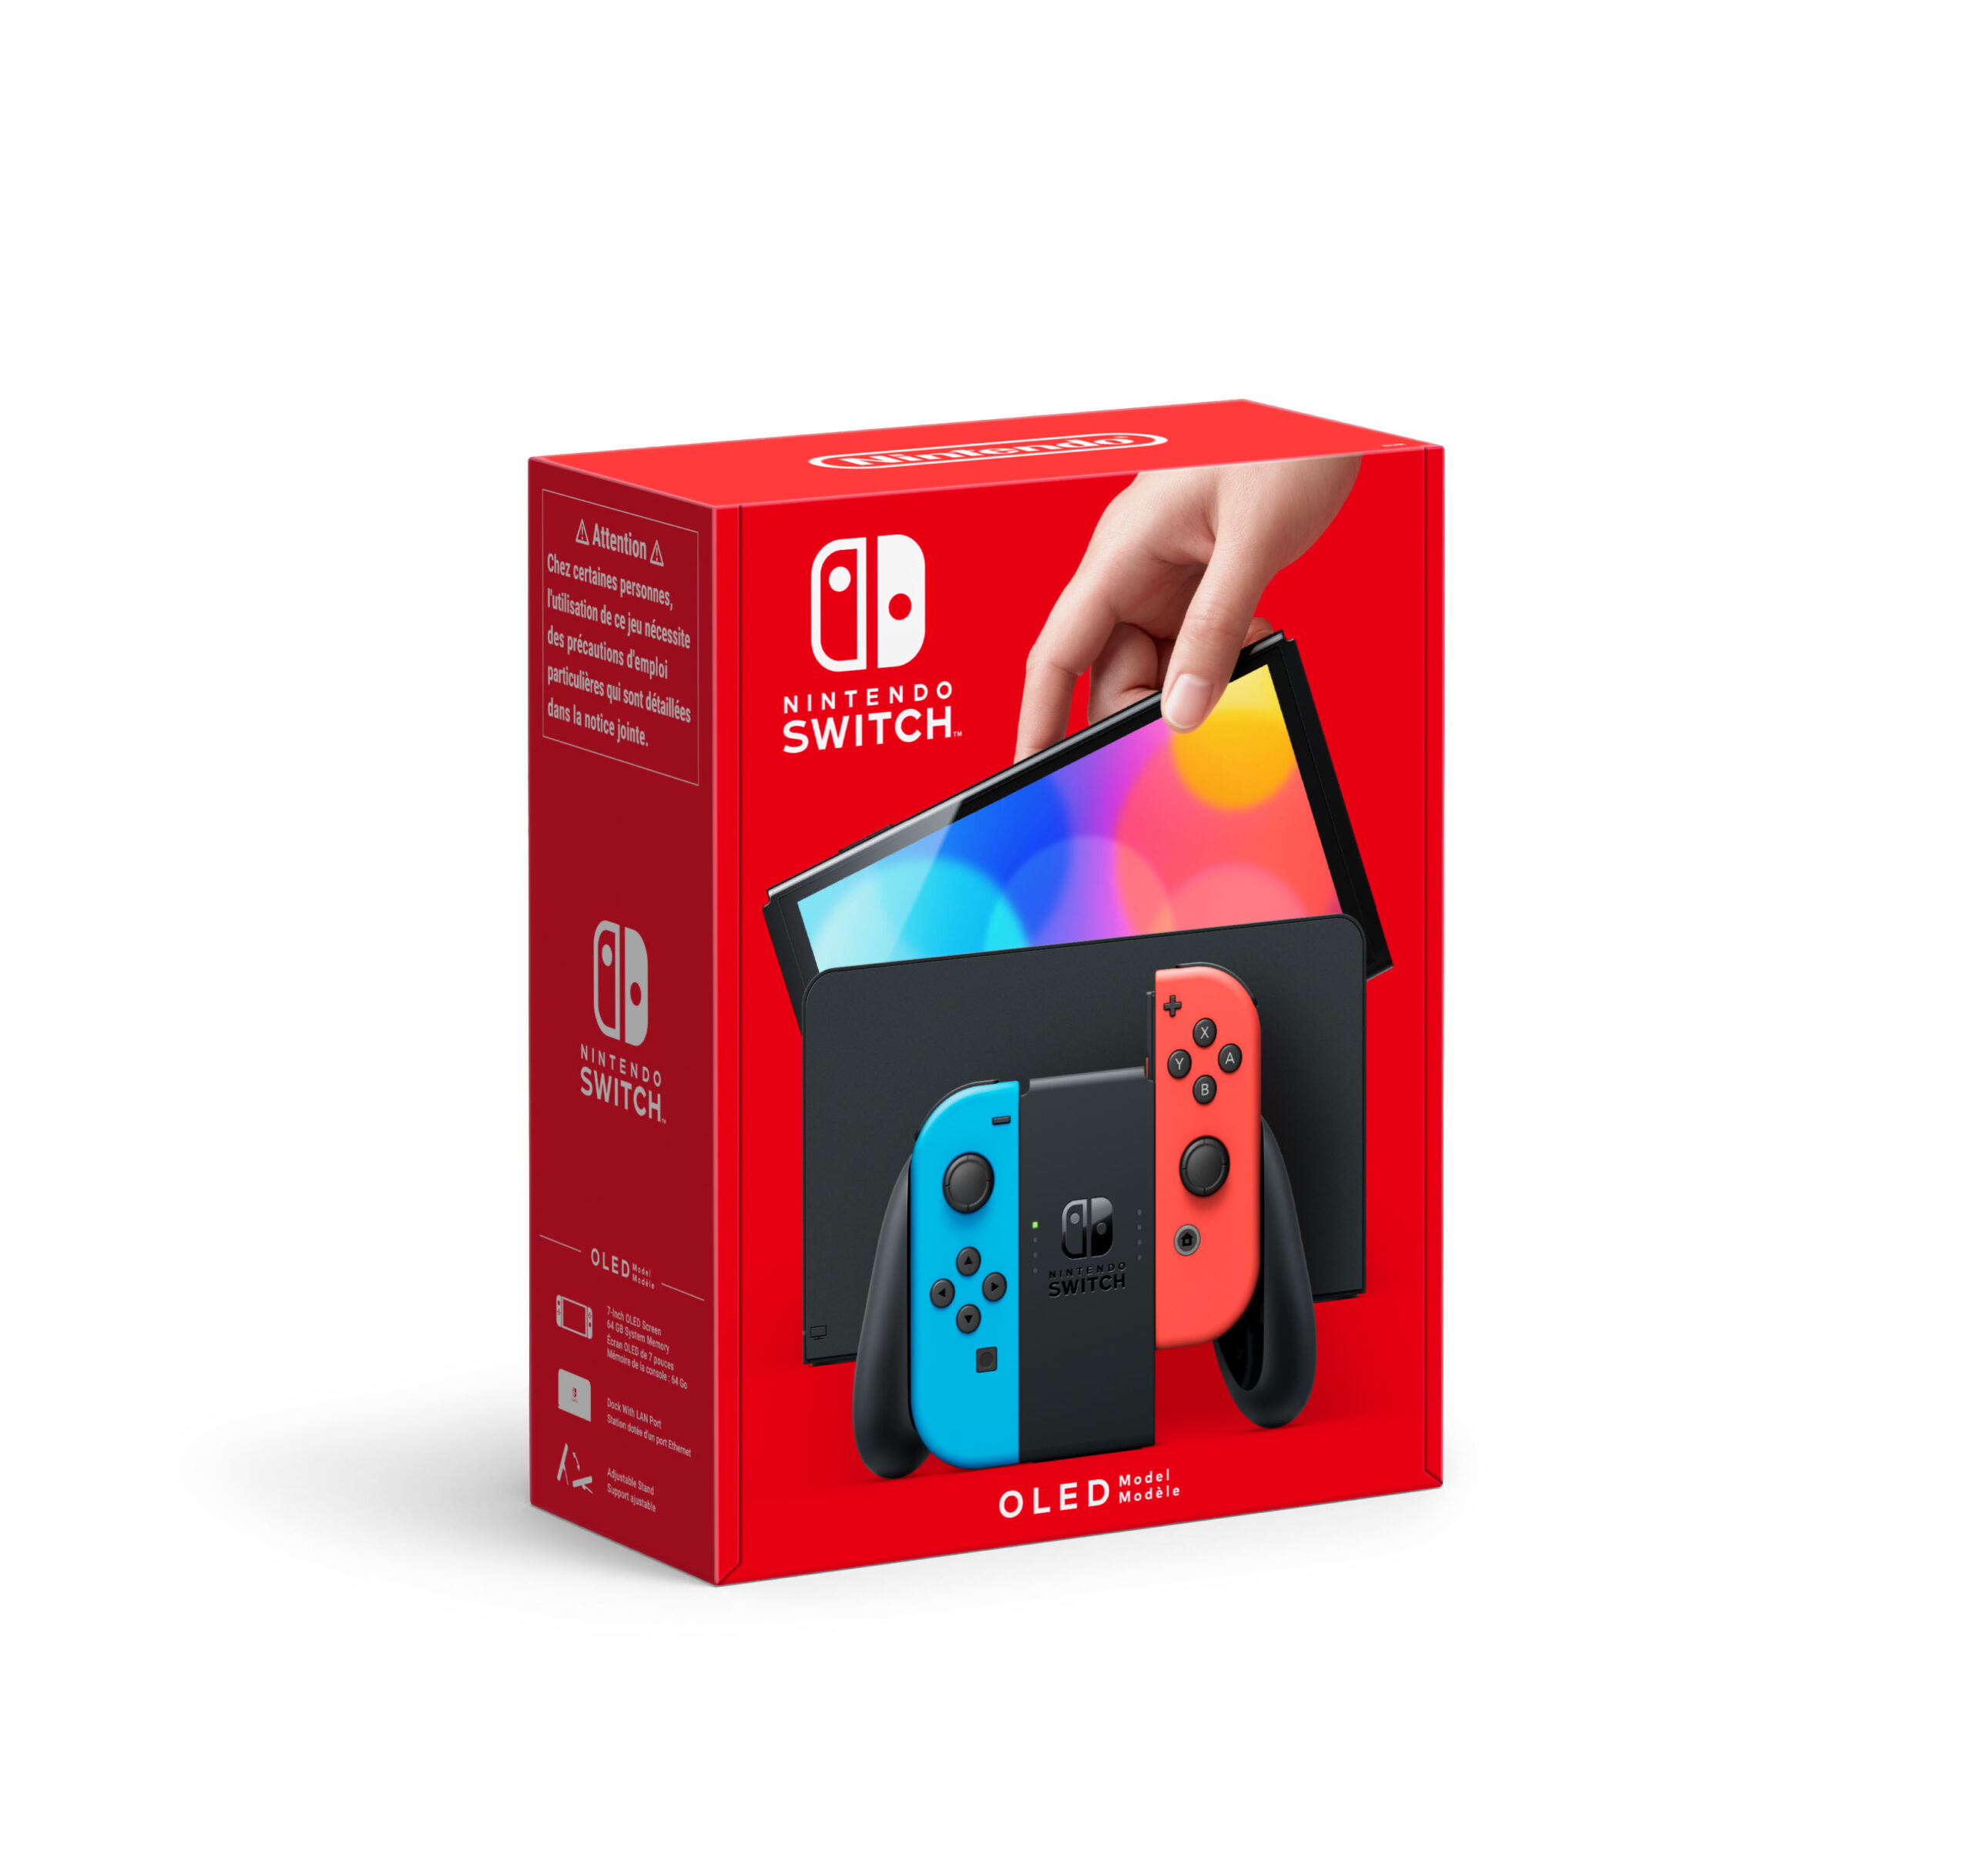 Nintendo Switch modello OLED, Blu Neon/Rosso Neon